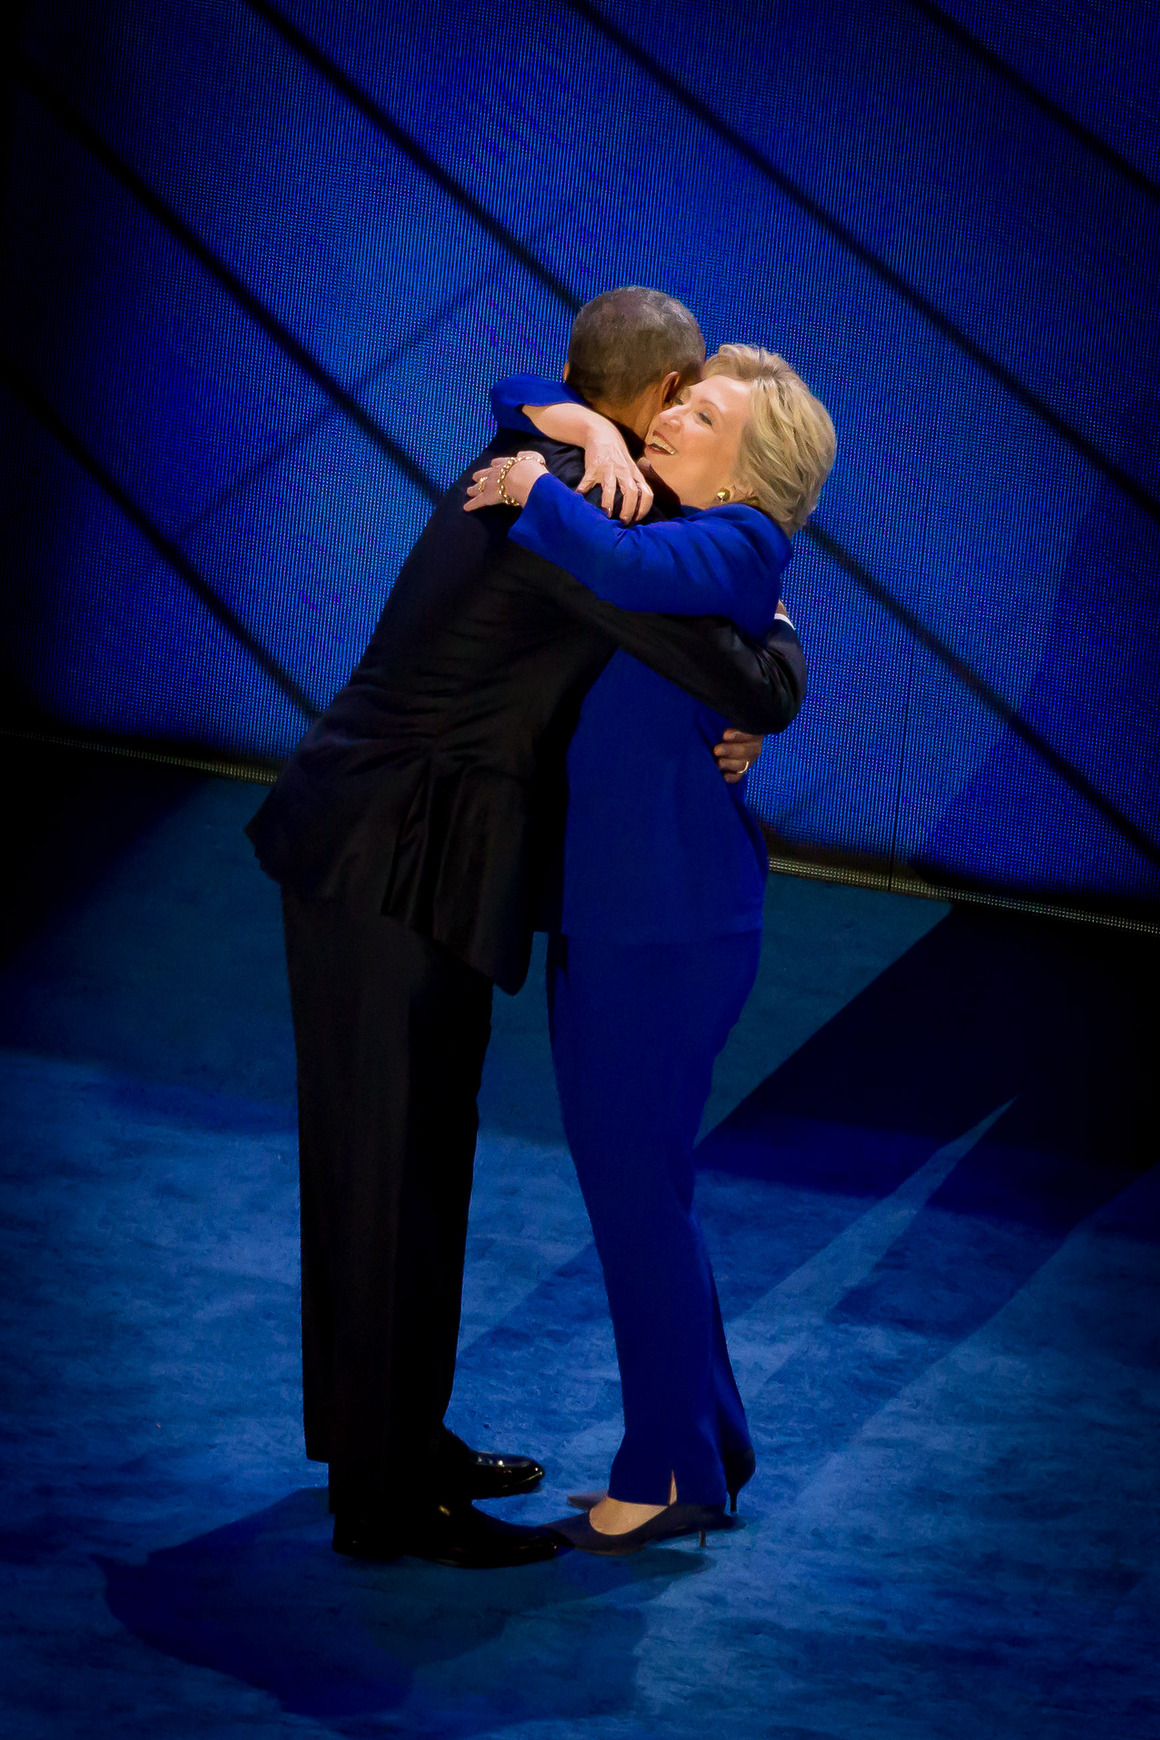 Barack and Hillary hug